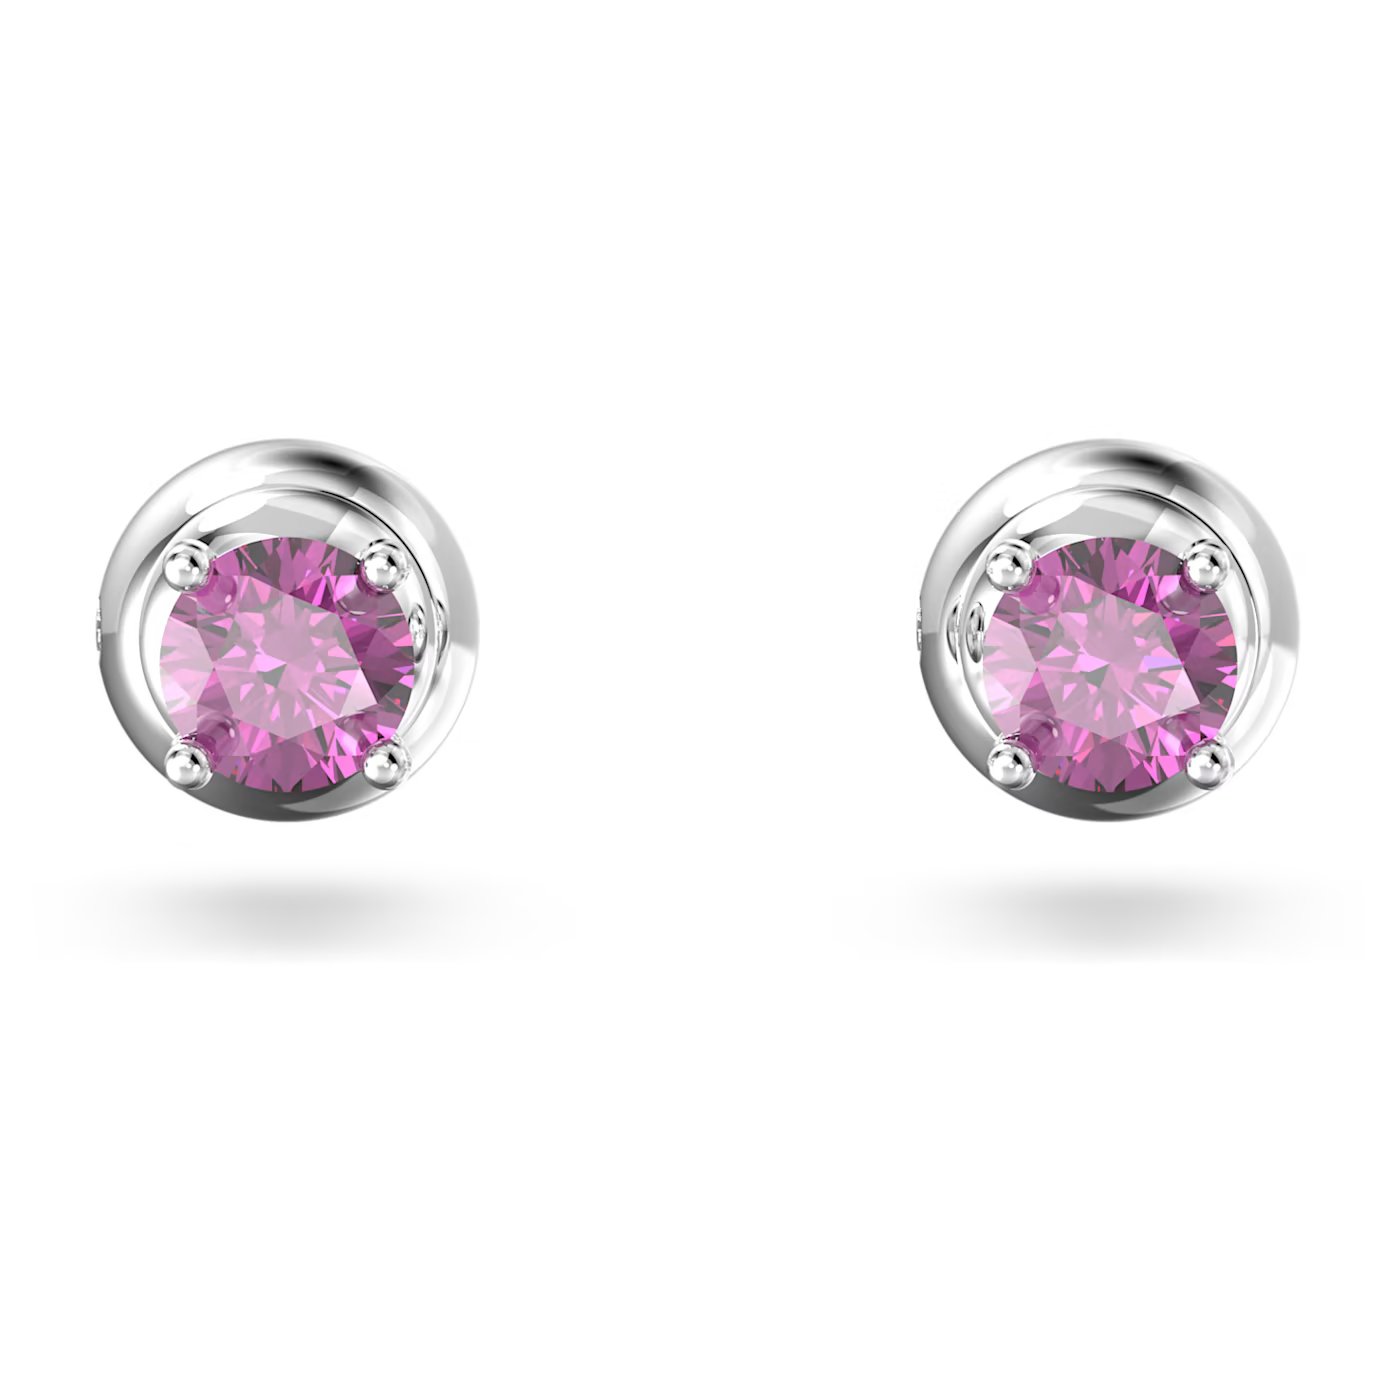 6331a93741bdd_px-stilla-stud-earrings--round-cut--purple--rhodium-plated-swarovski-5639135.jpg